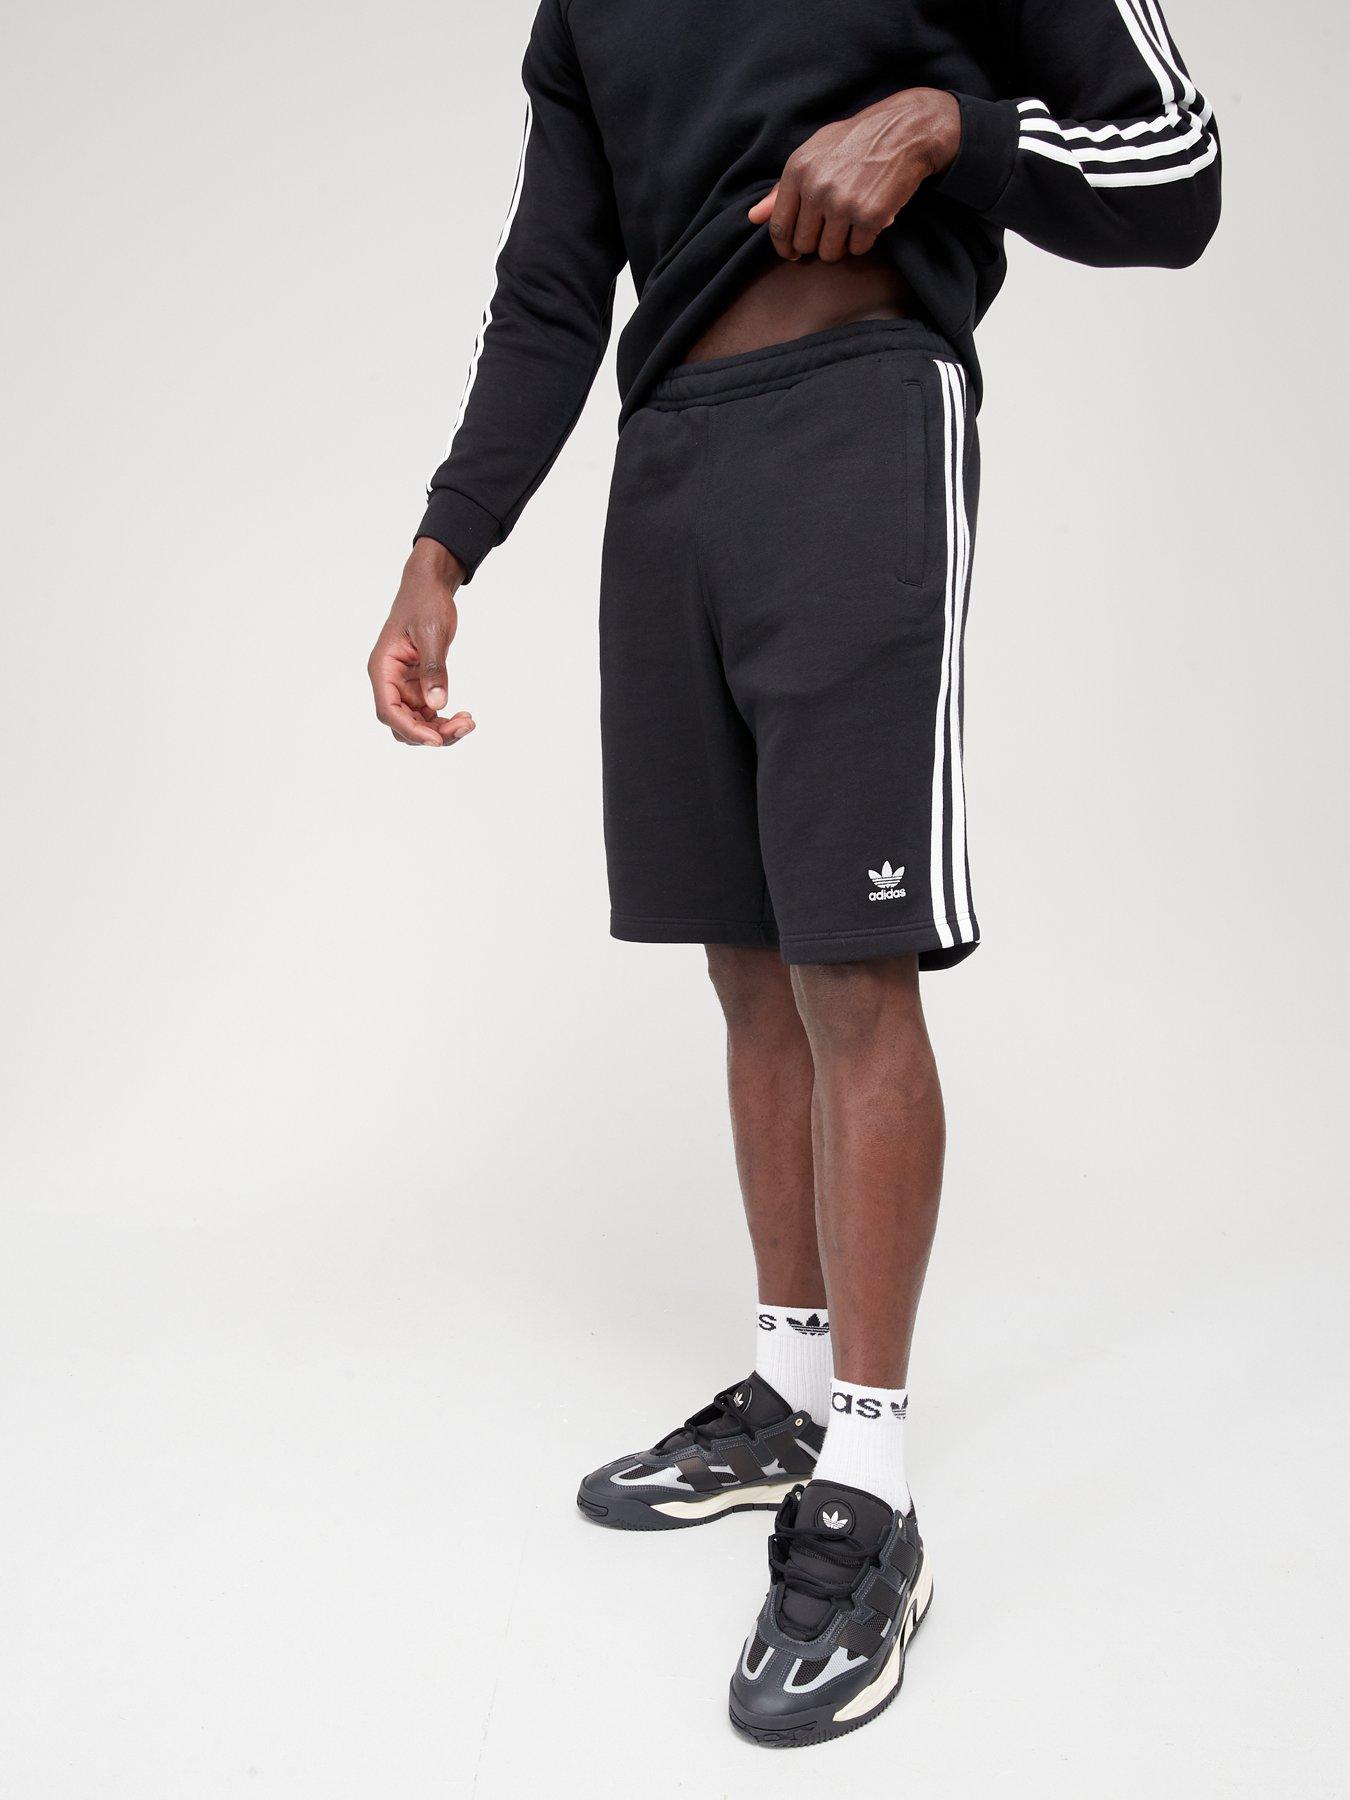 adidas-originals-3s-shorts-black.jpg?$180x240_retinamobilex2$